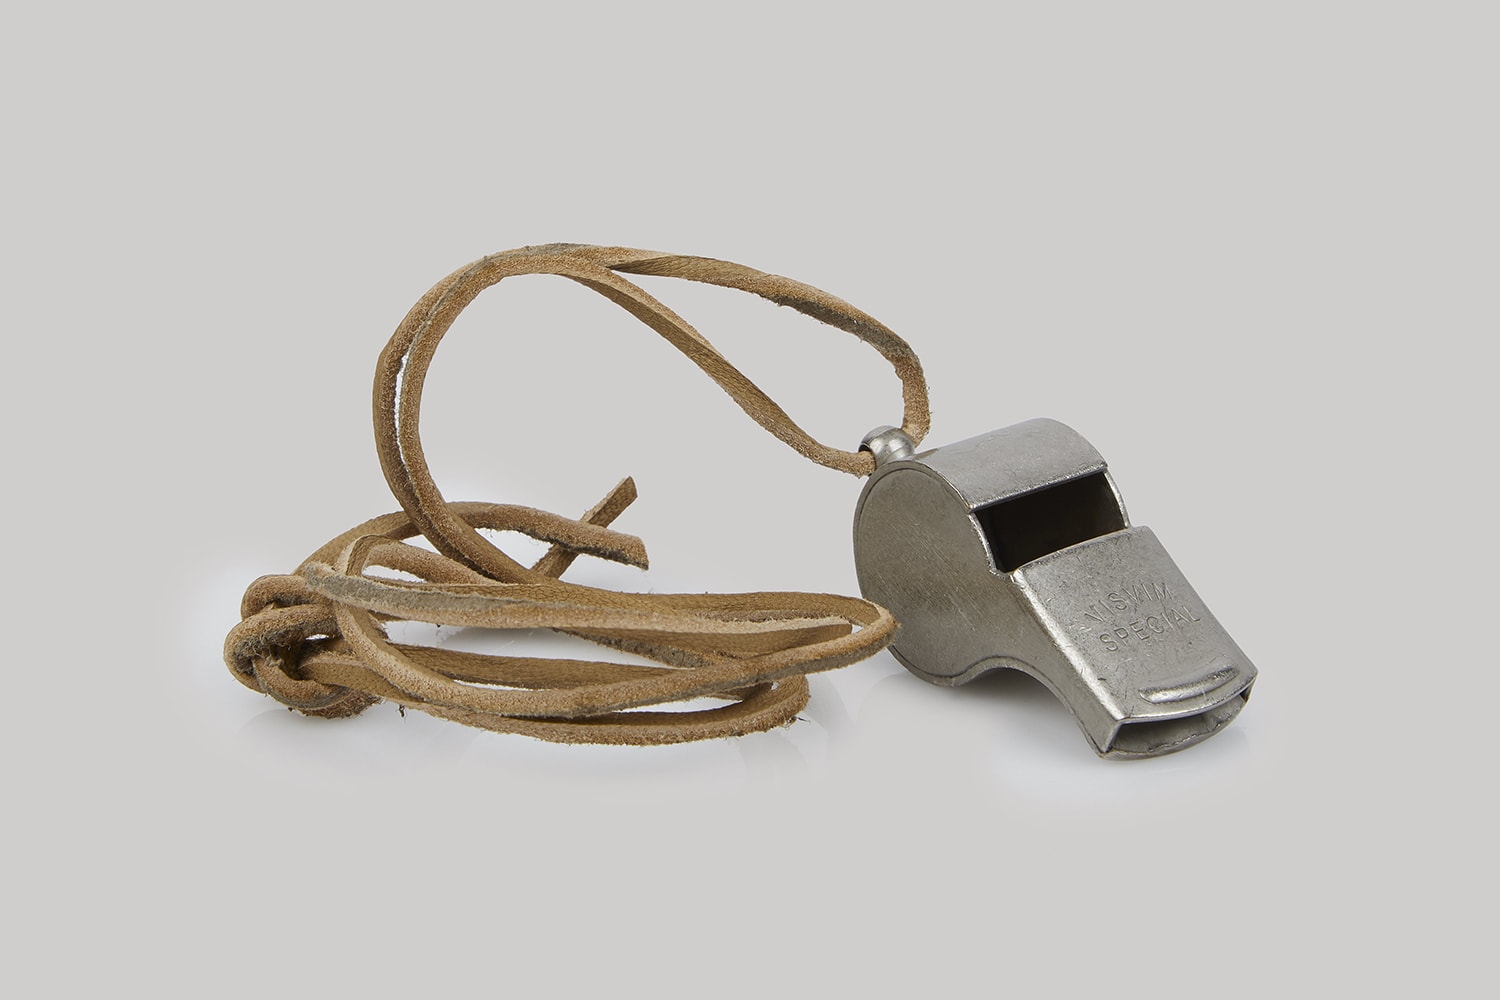 visvim 推出定價 $250 美元的哨子項鍊